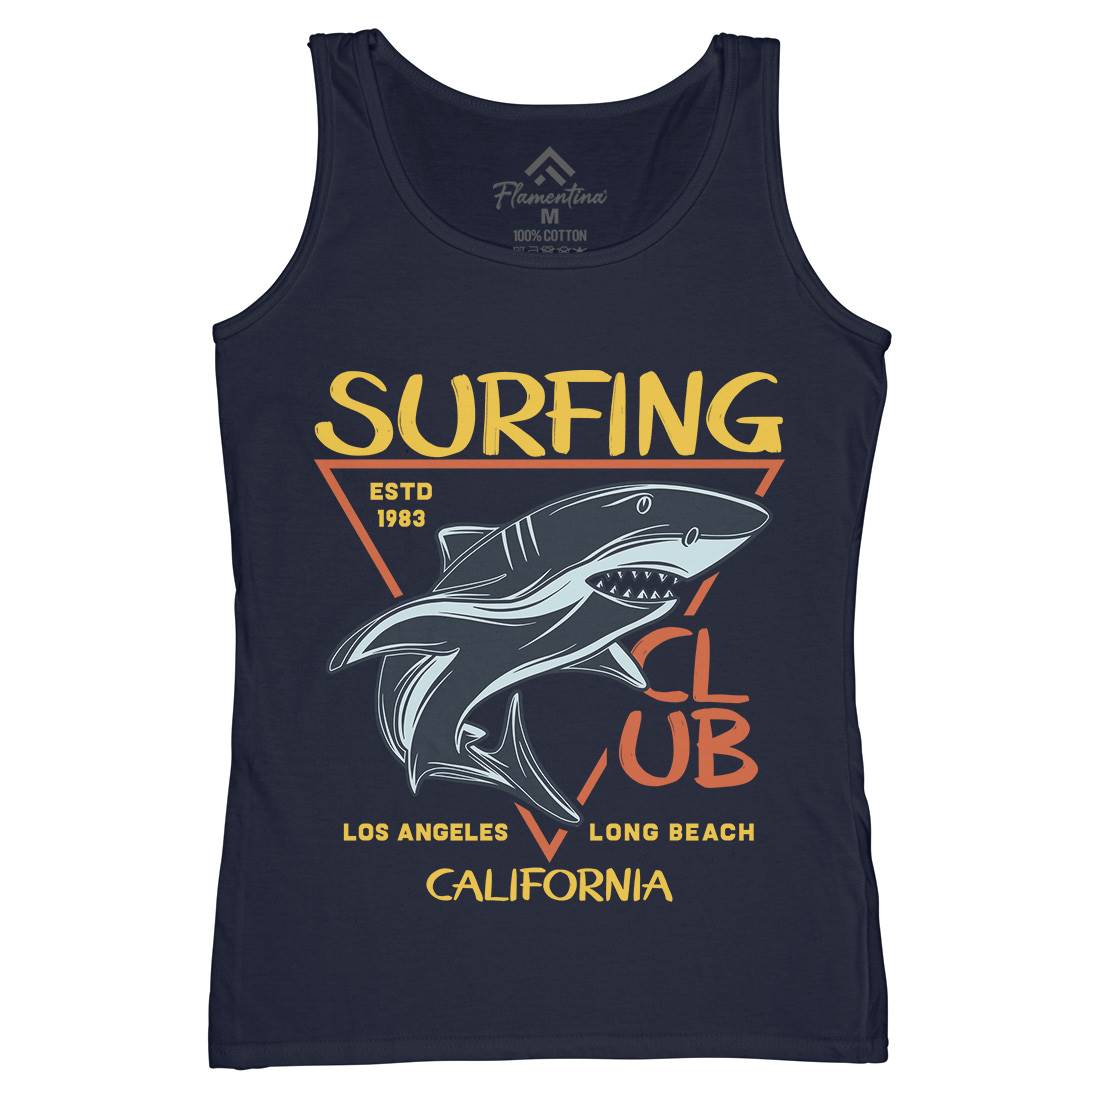 Shark Surfing Club Womens Organic Tank Top Vest Navy D968